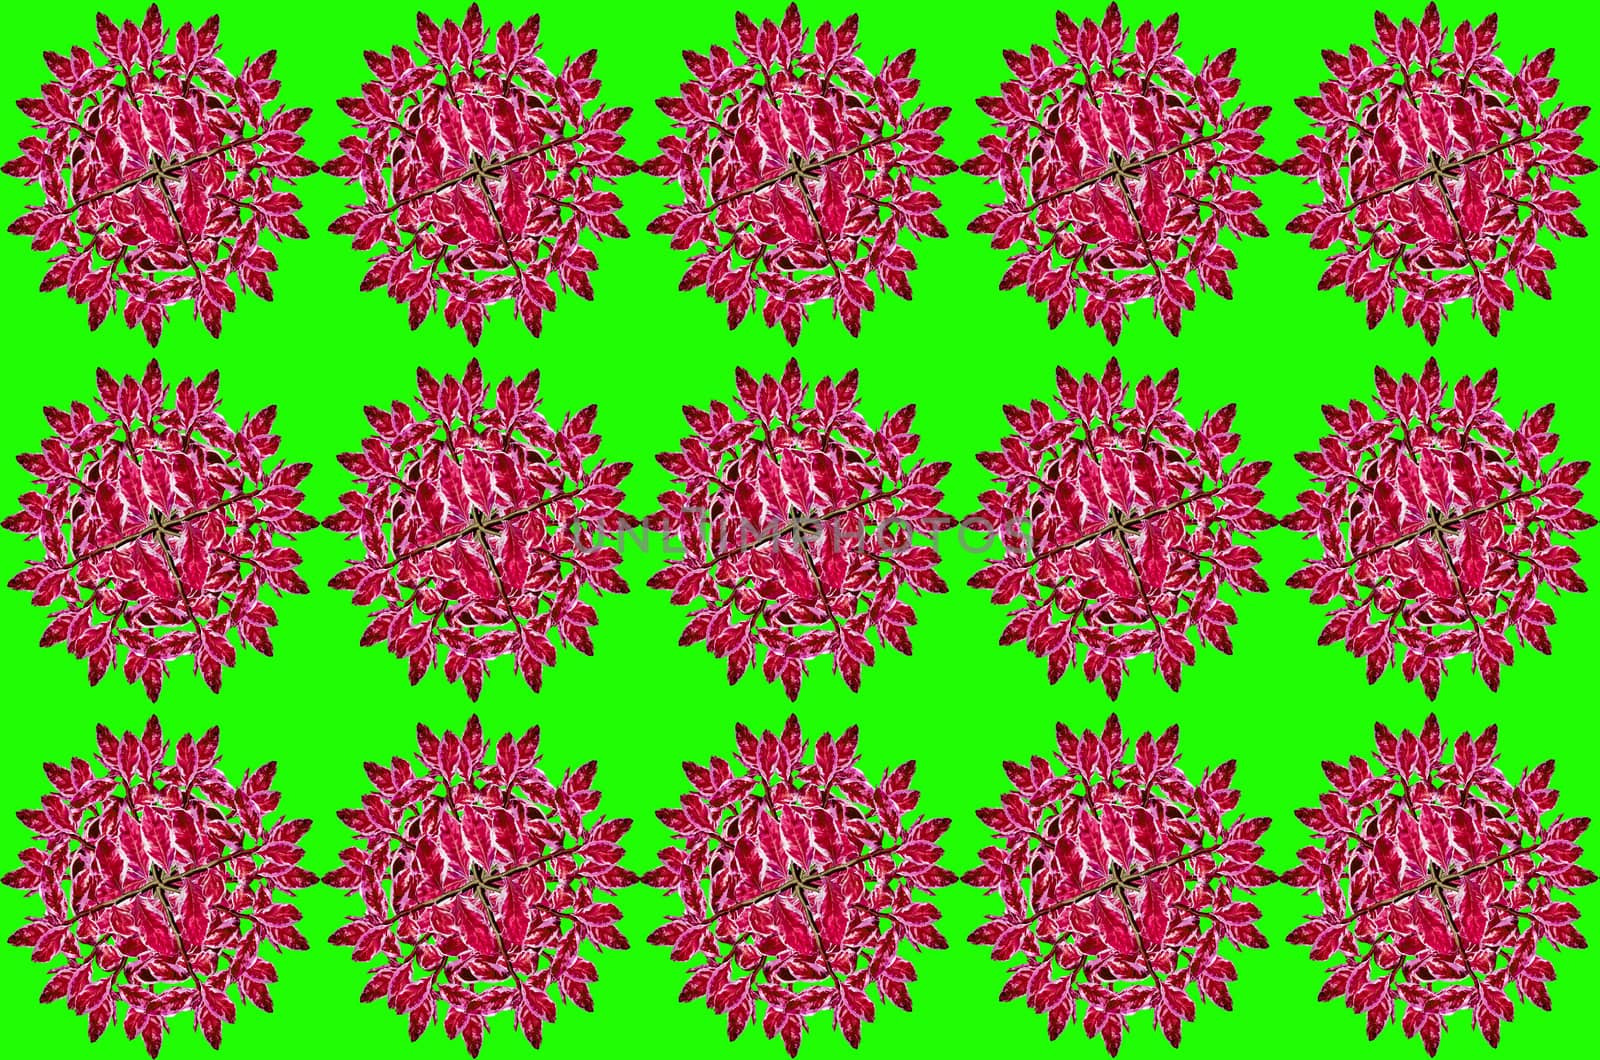 Group Redbird Cactus background on green background
